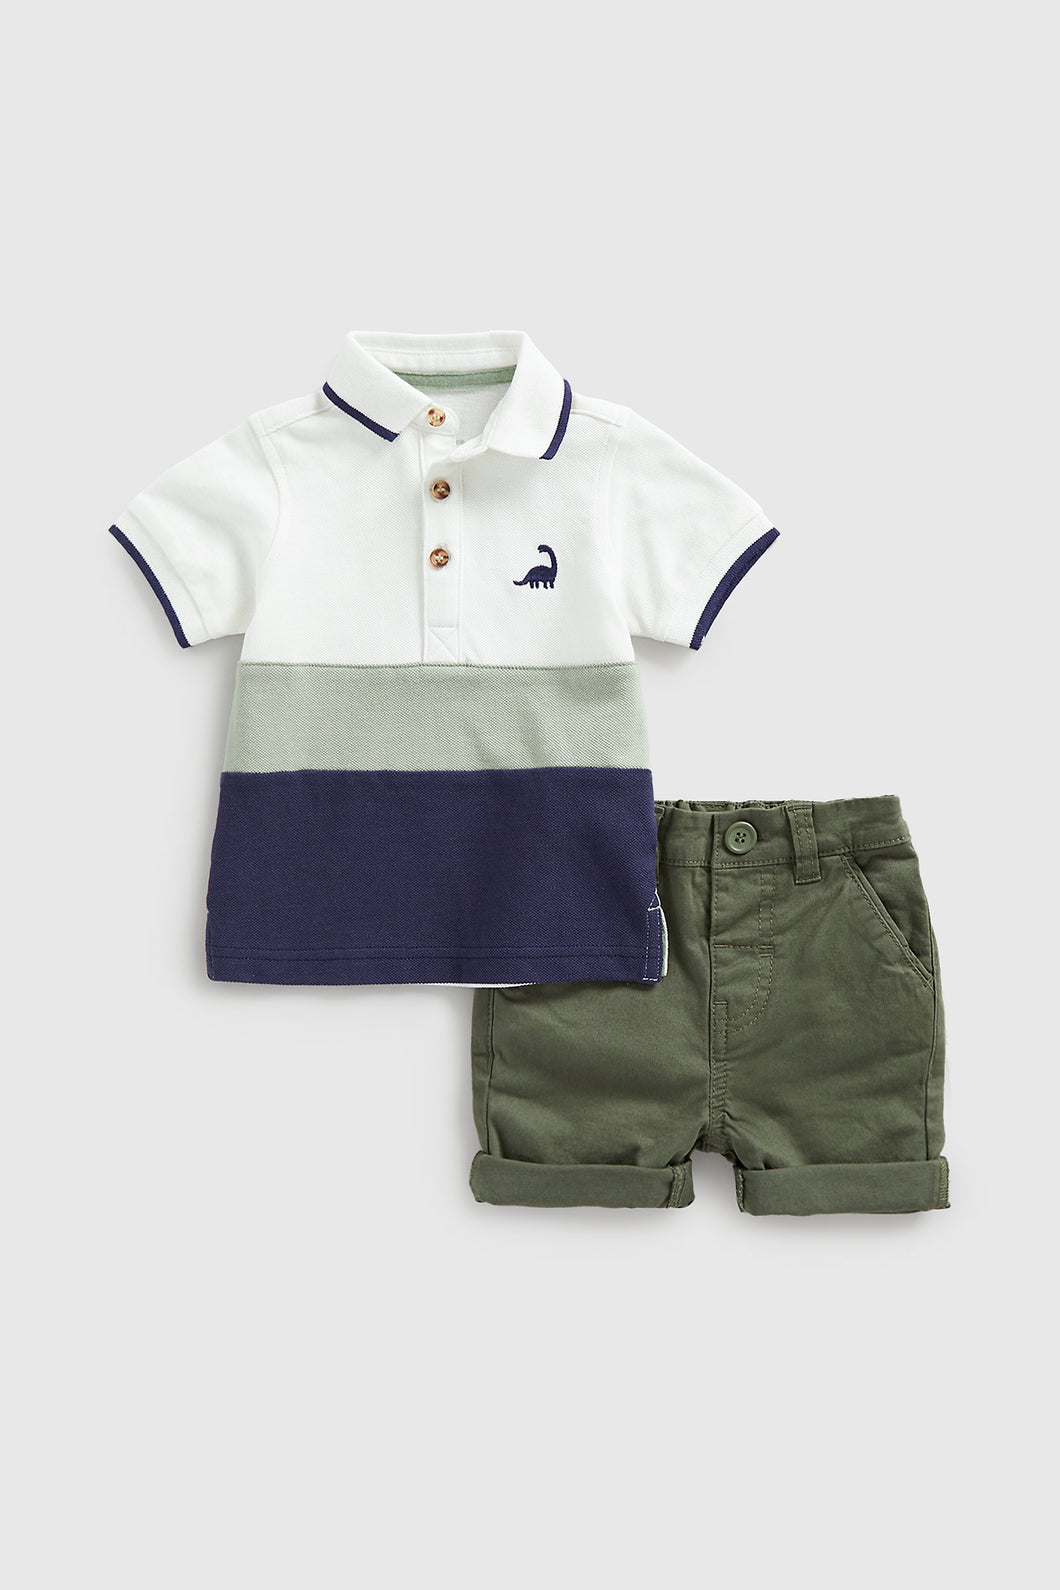 Mothercare Polo Shirt And Shorts Set